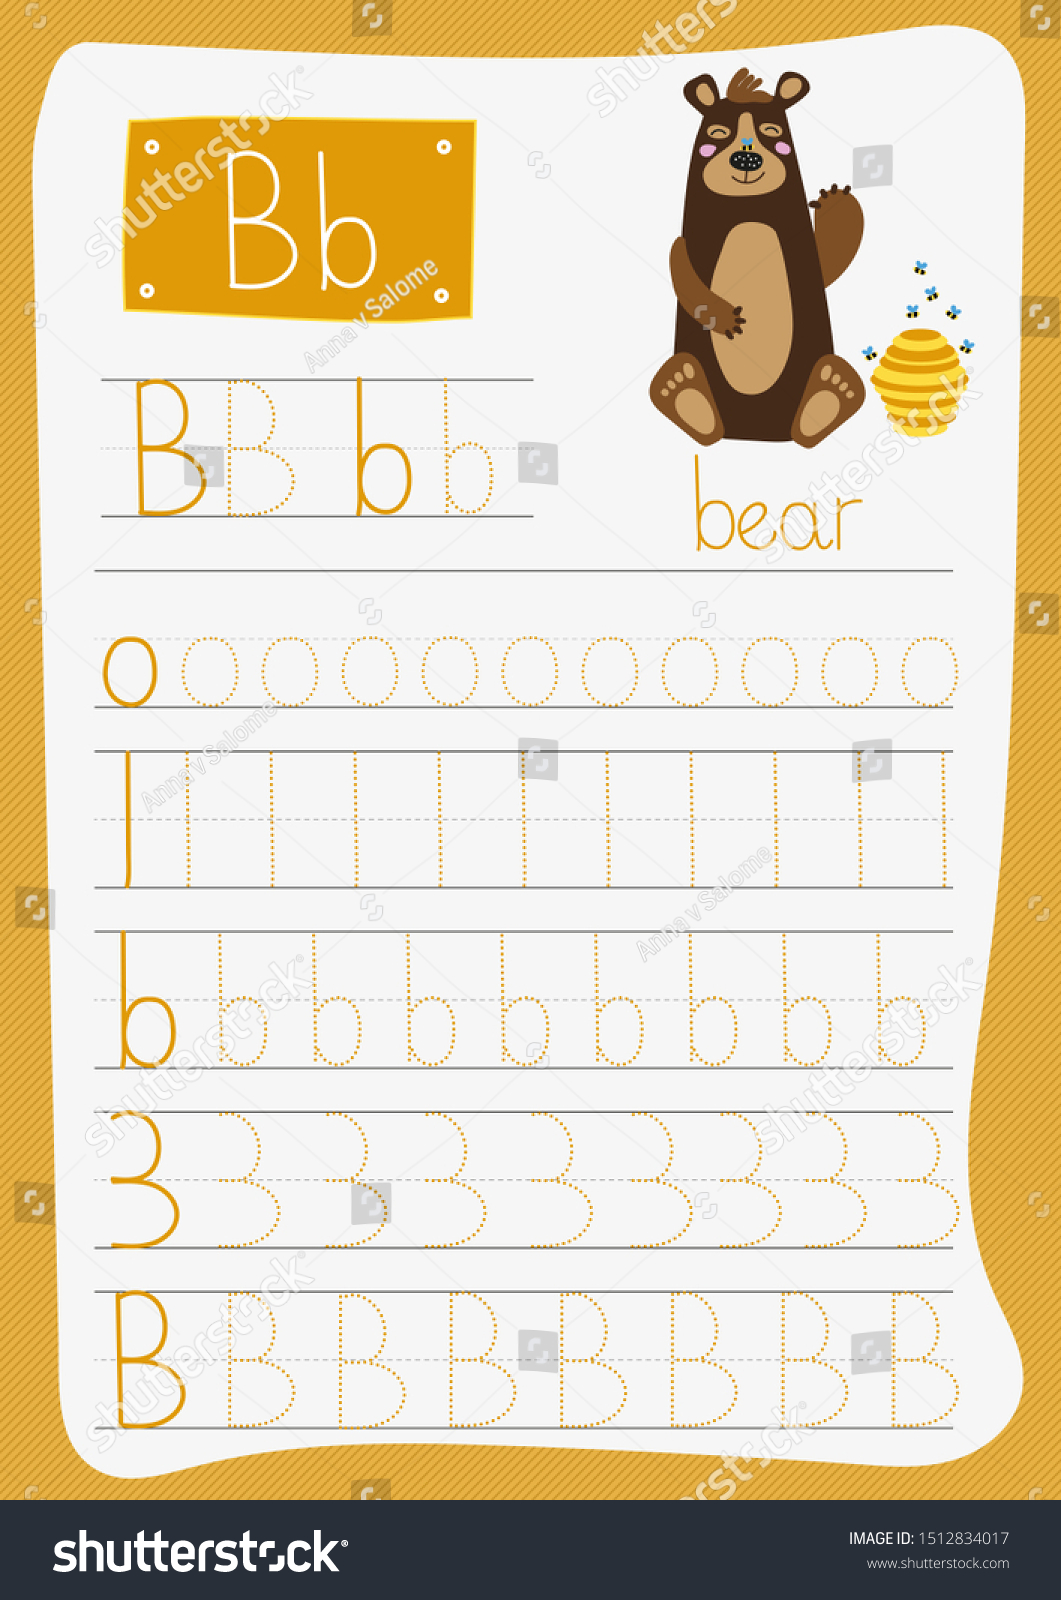 printable english alphabet letter b kids stock illustration 1512834017